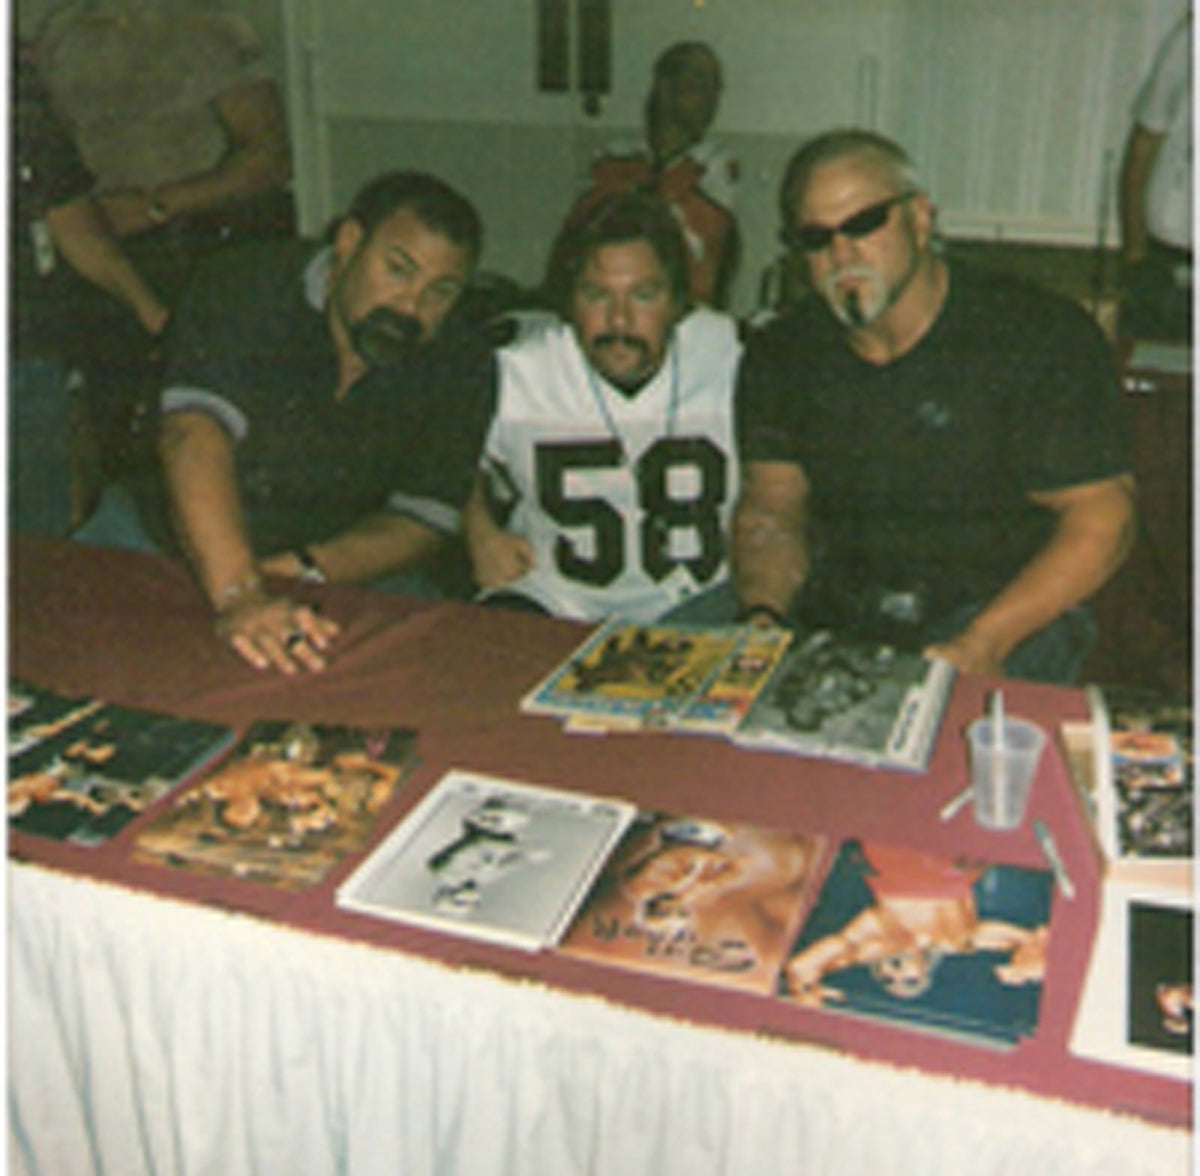 BD181  Rick and Scott Steiner  Autographed VERY RARE  Vintage Wrestling Magazine w/COA